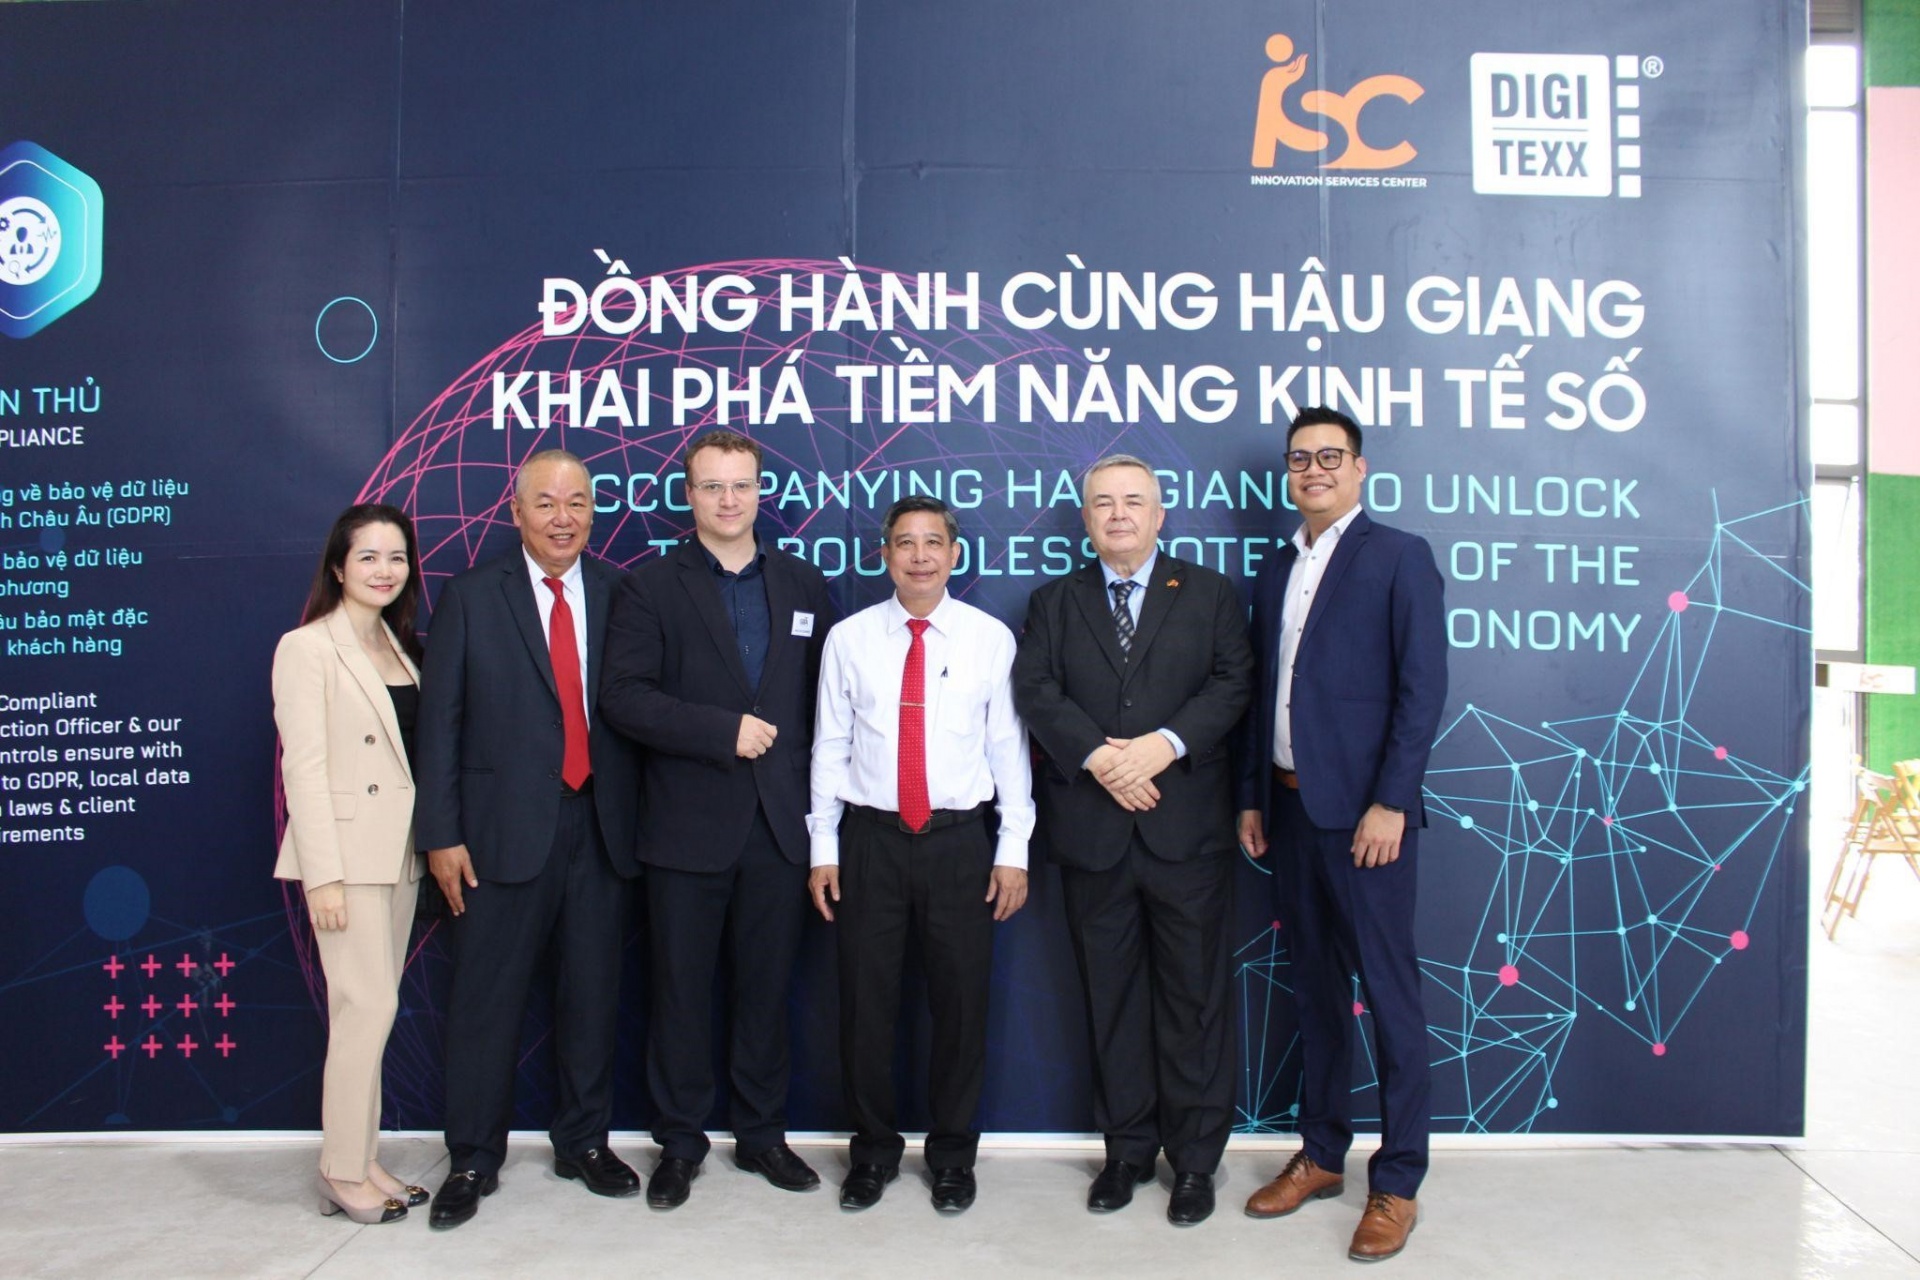 DIGI-TEXX accompanying Hau Giang province to unlock the potential of digital economy (PR)